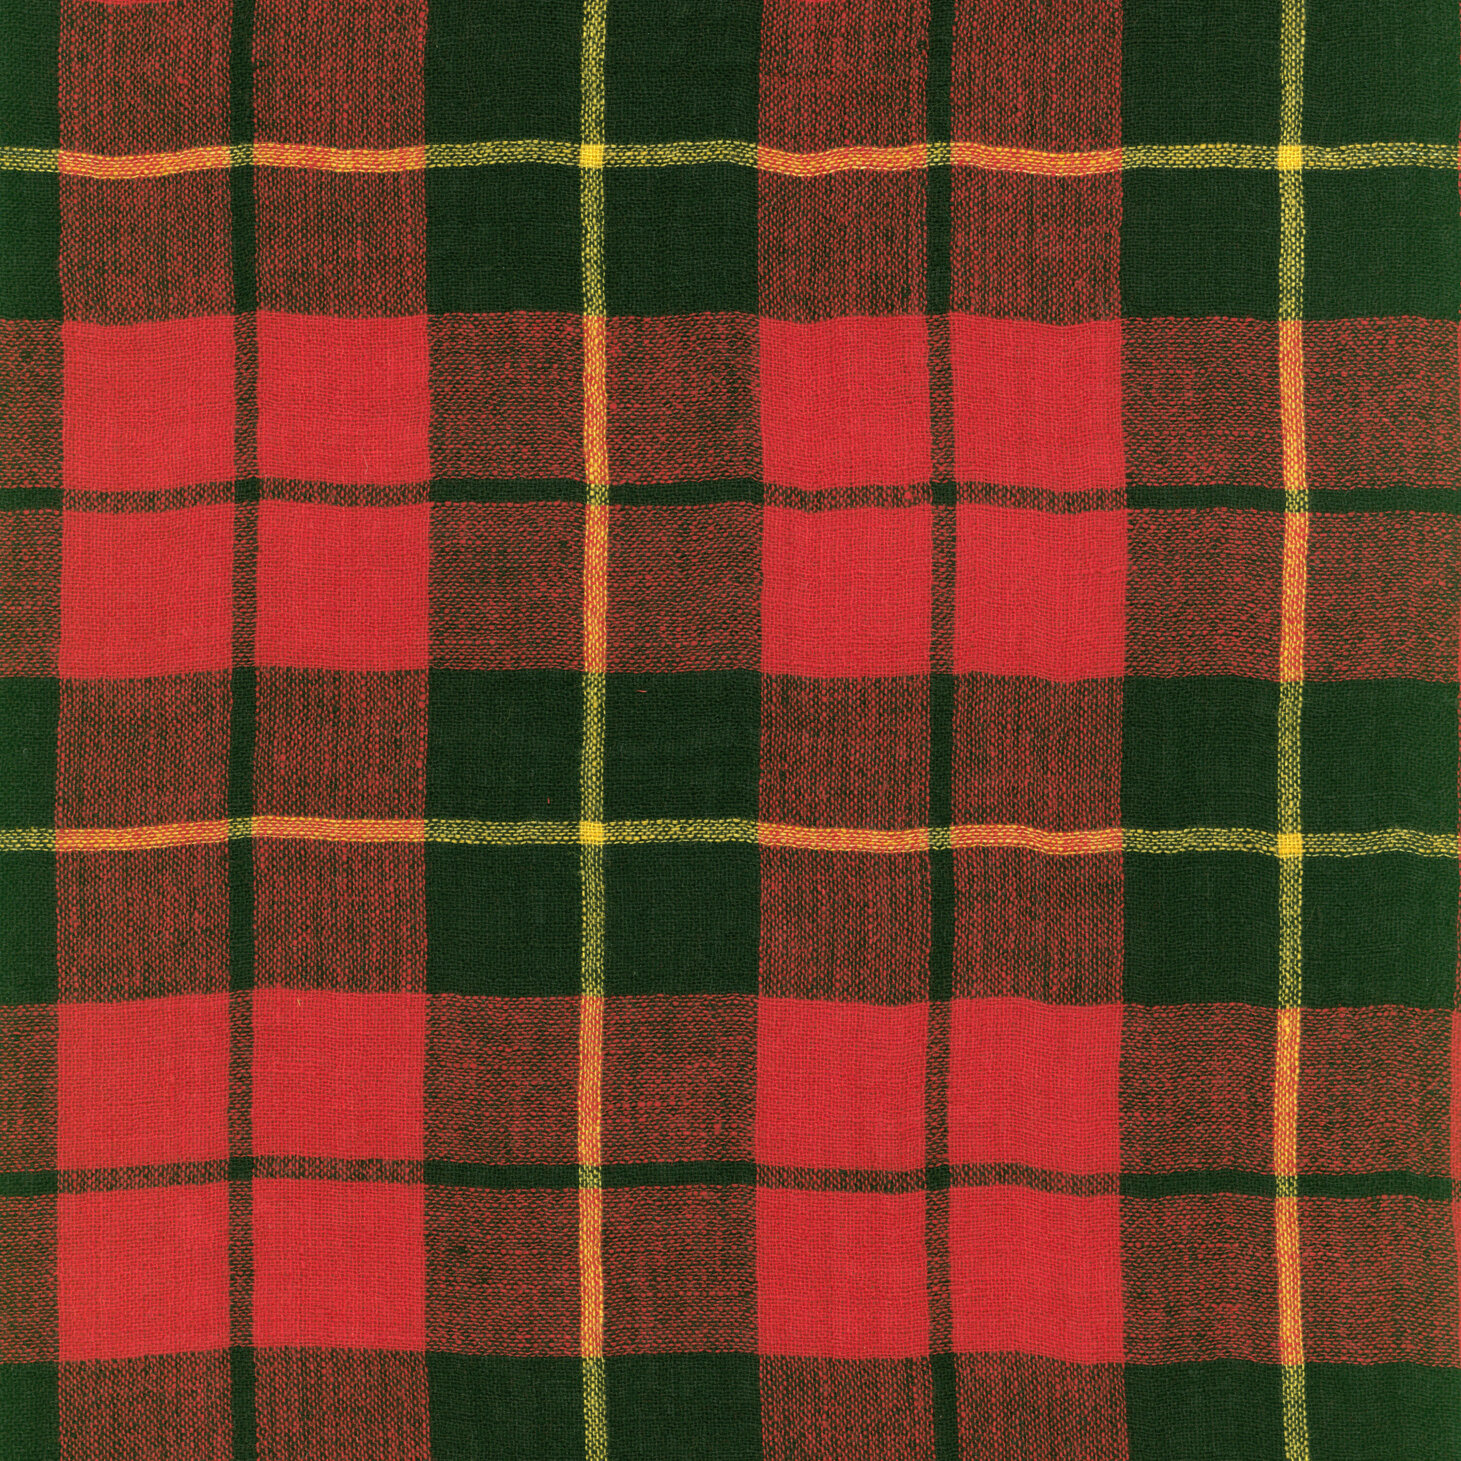 Red Tartan Plaid Irish Linen - Inverness - 12 Yard Piece — Dallas A.  Saunders Artisan Textiles & More